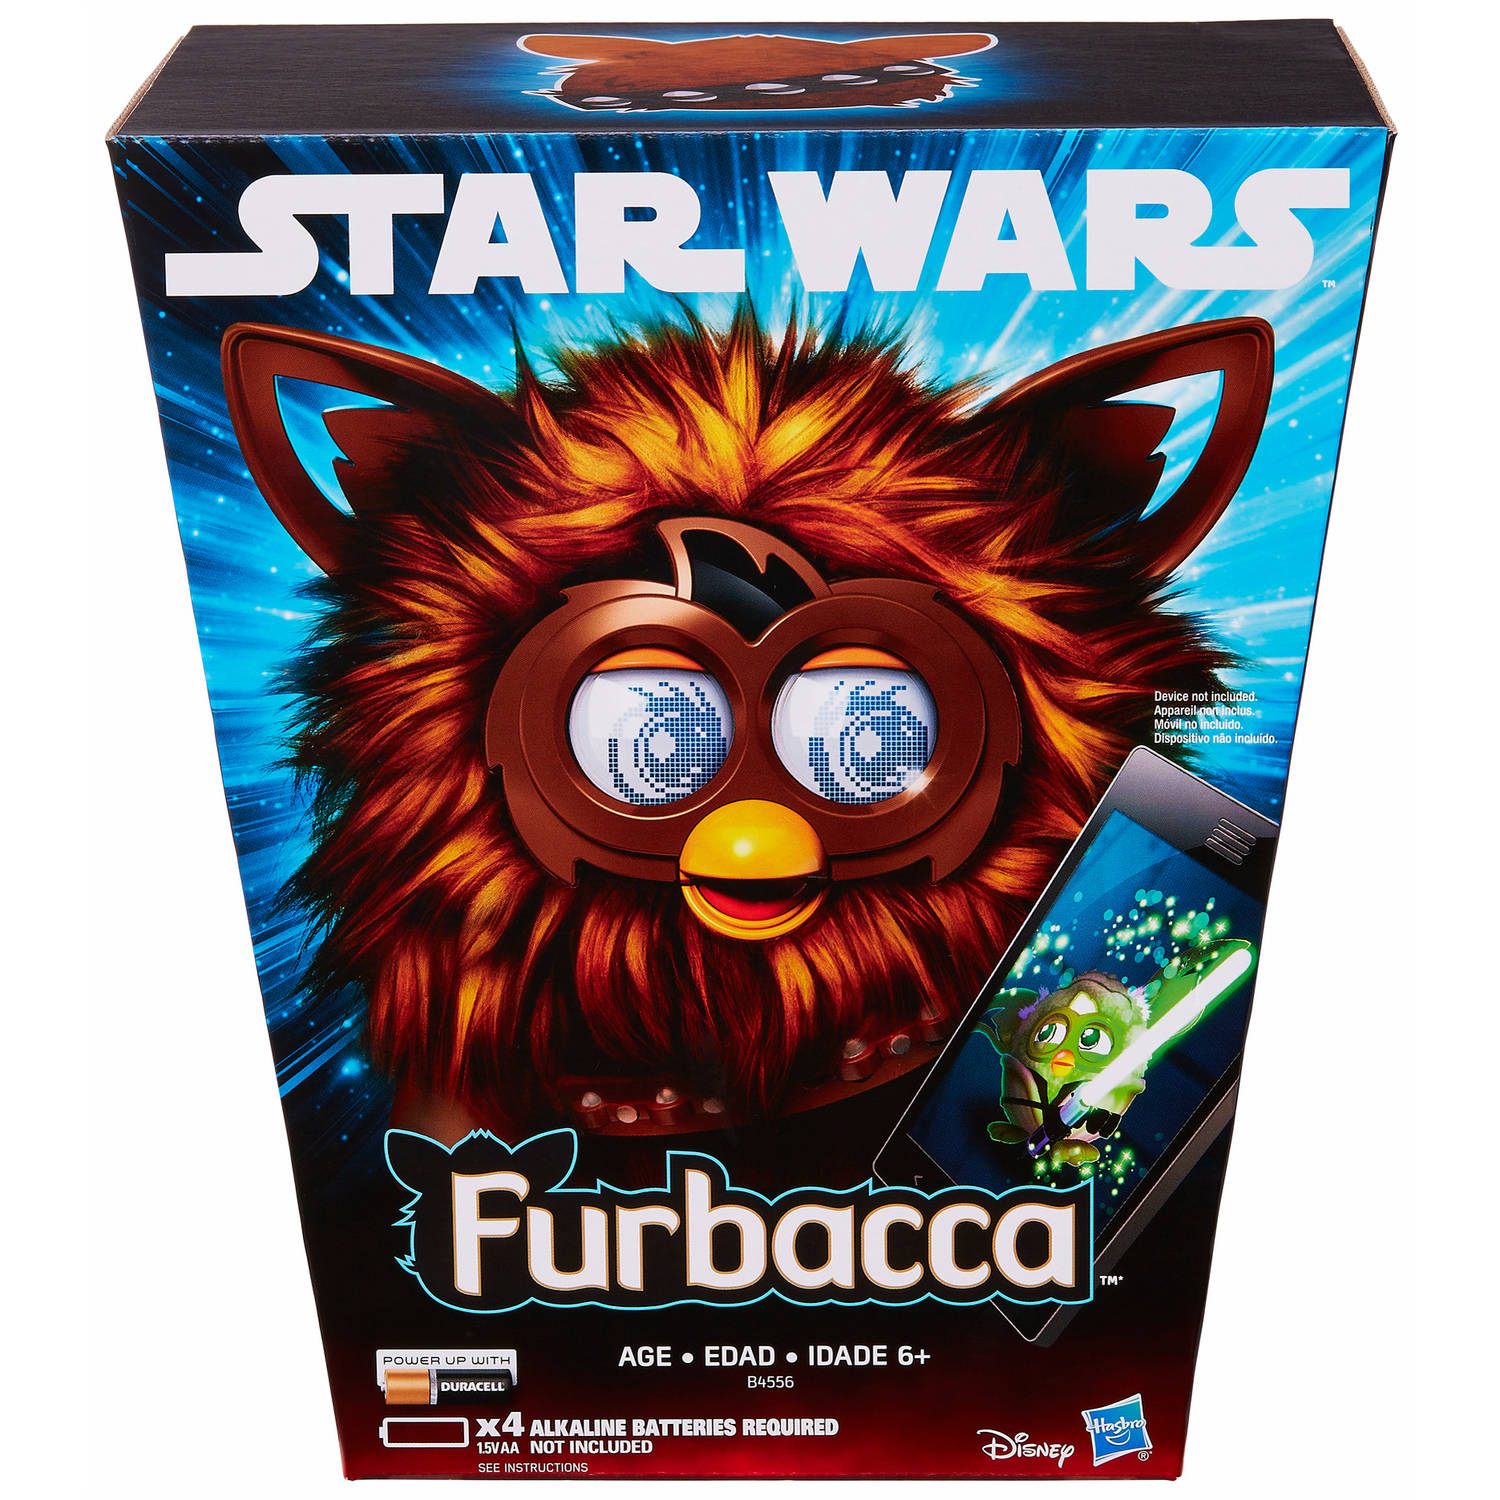 Star Wars Furbacca - image 2 of 14